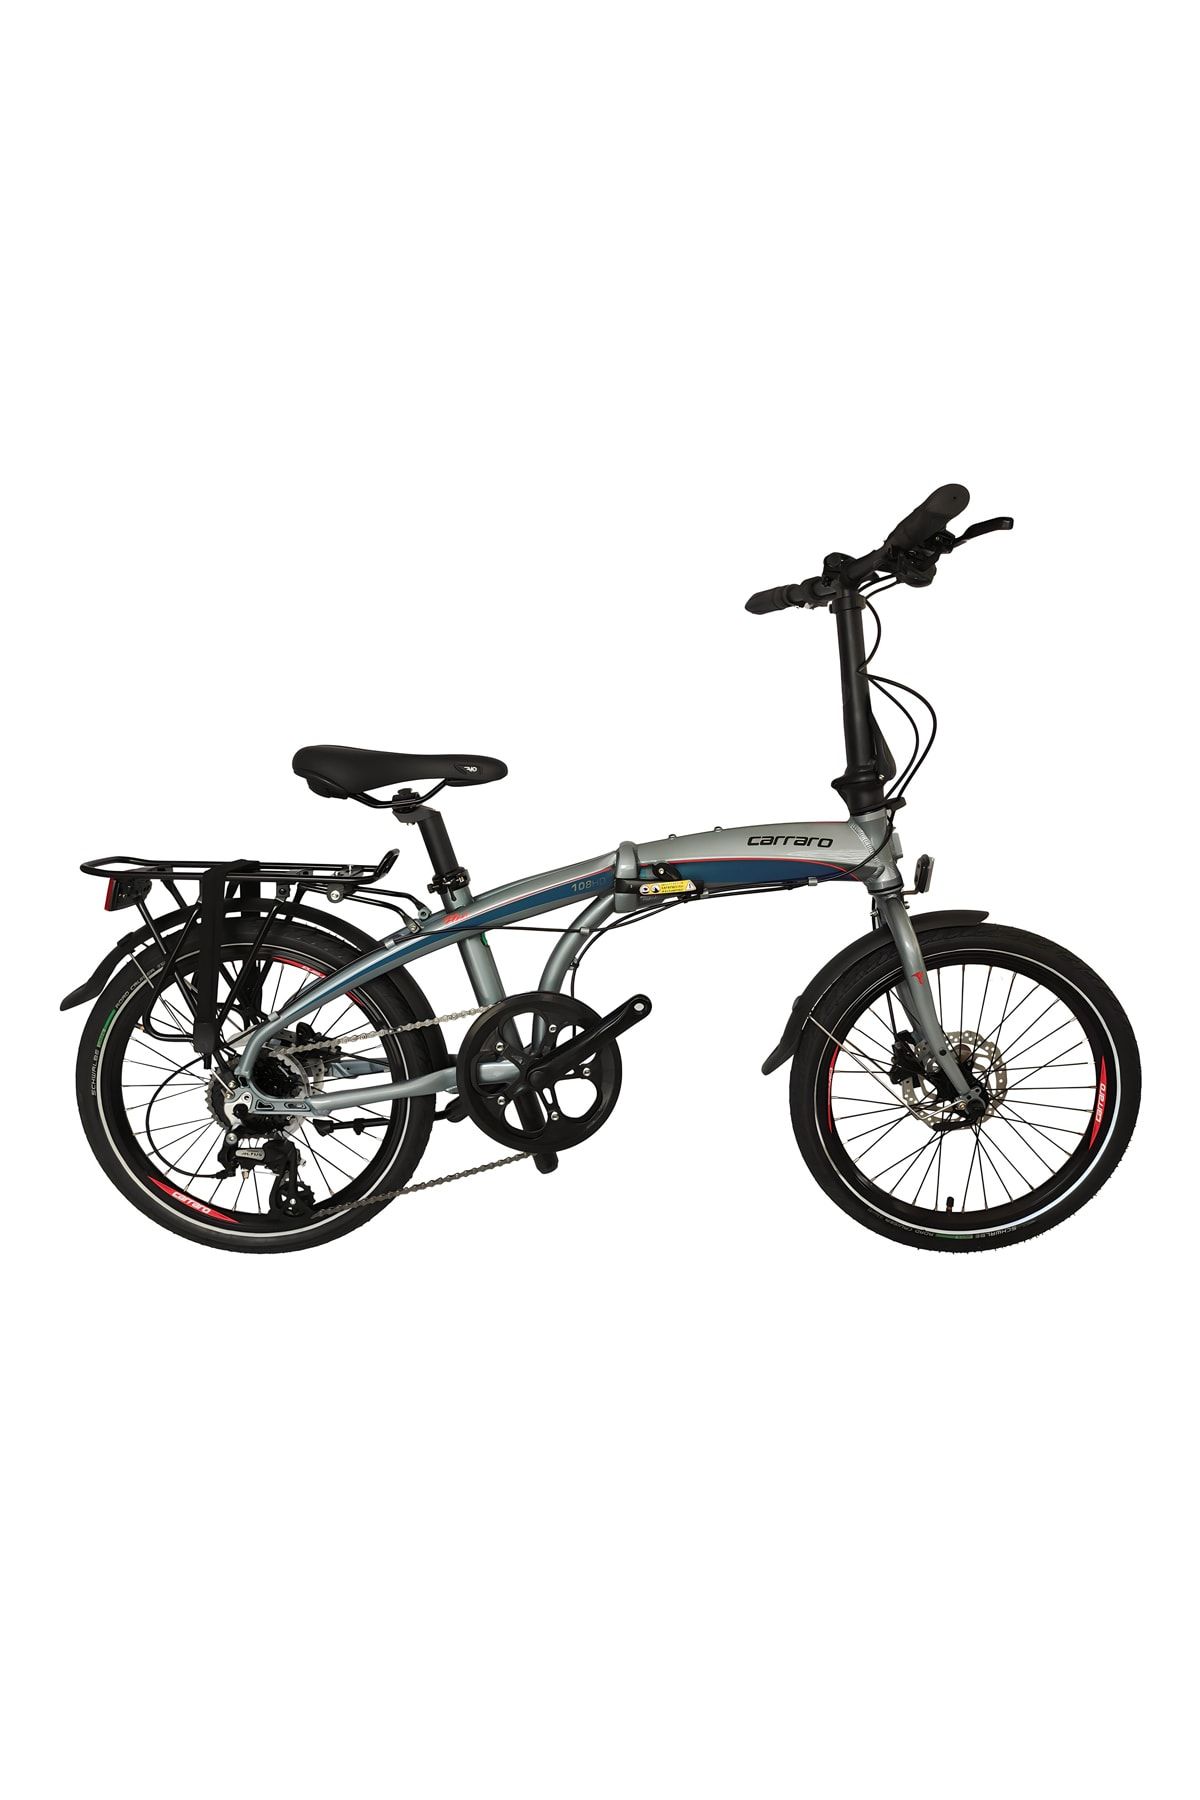 Carraro Flexi 108 HD 20 jant Katlanabilir Bisiklet (Metalik Koyu Gri Koyu Turkuaz)